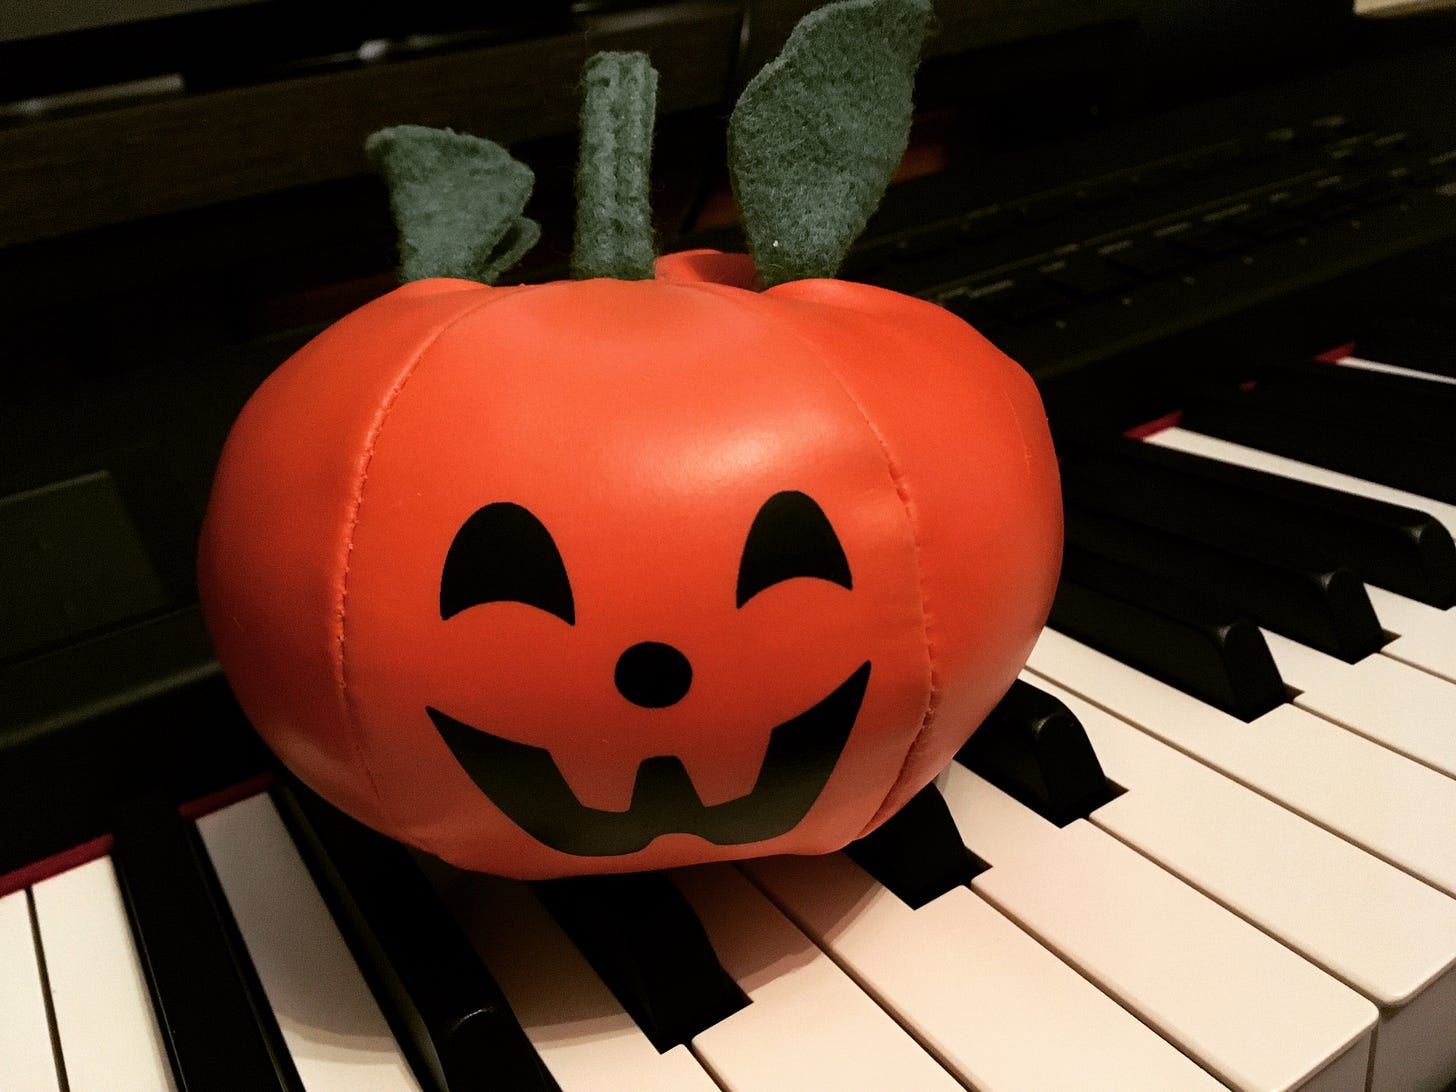 A little plush jack-o'-lantern sitting on top of a piano keyboard.